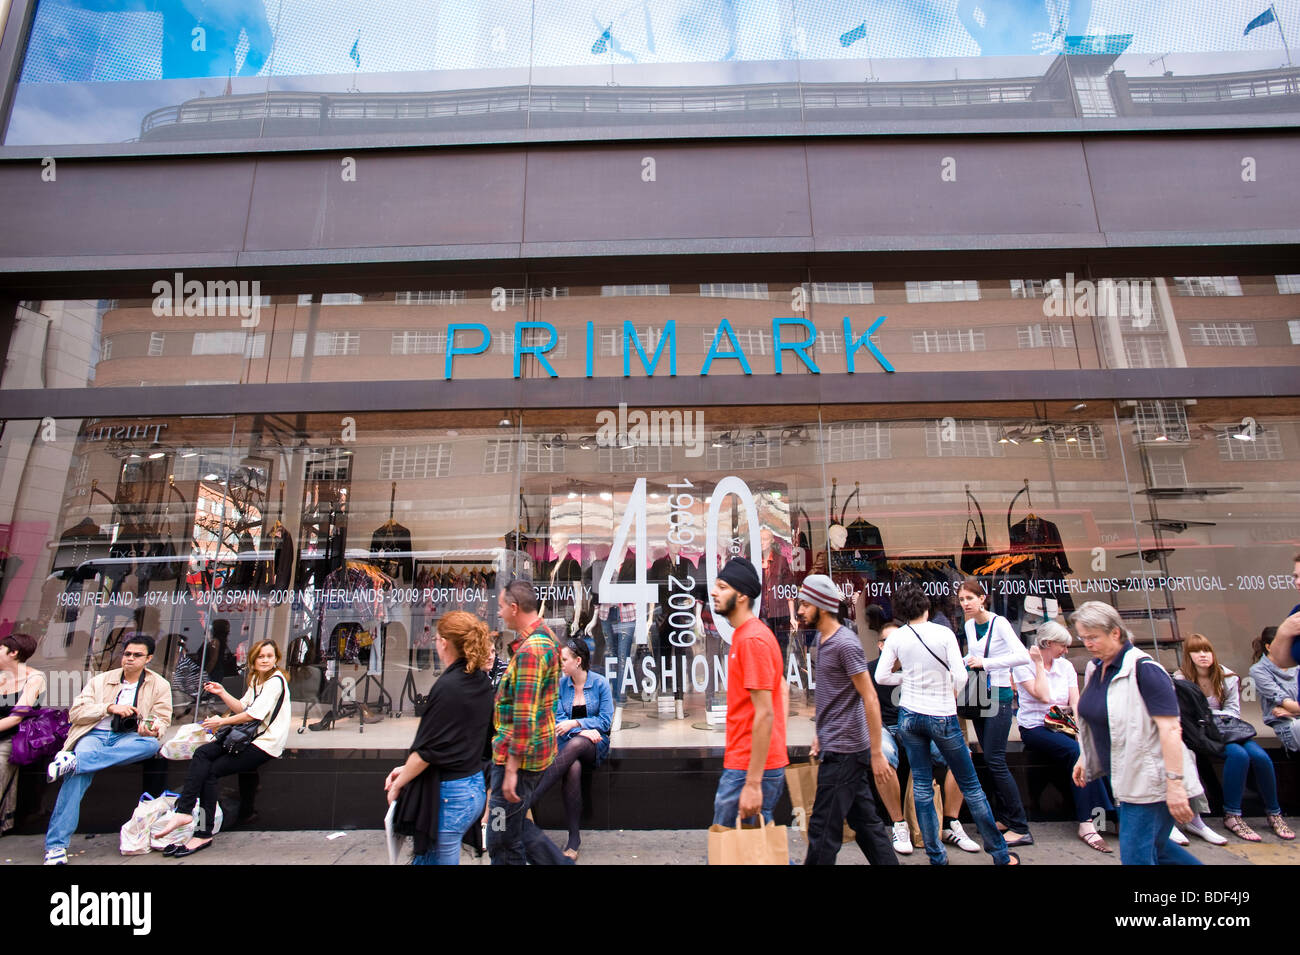 Primark department store, Oxford Street, London, United Kingdom Stock Photo